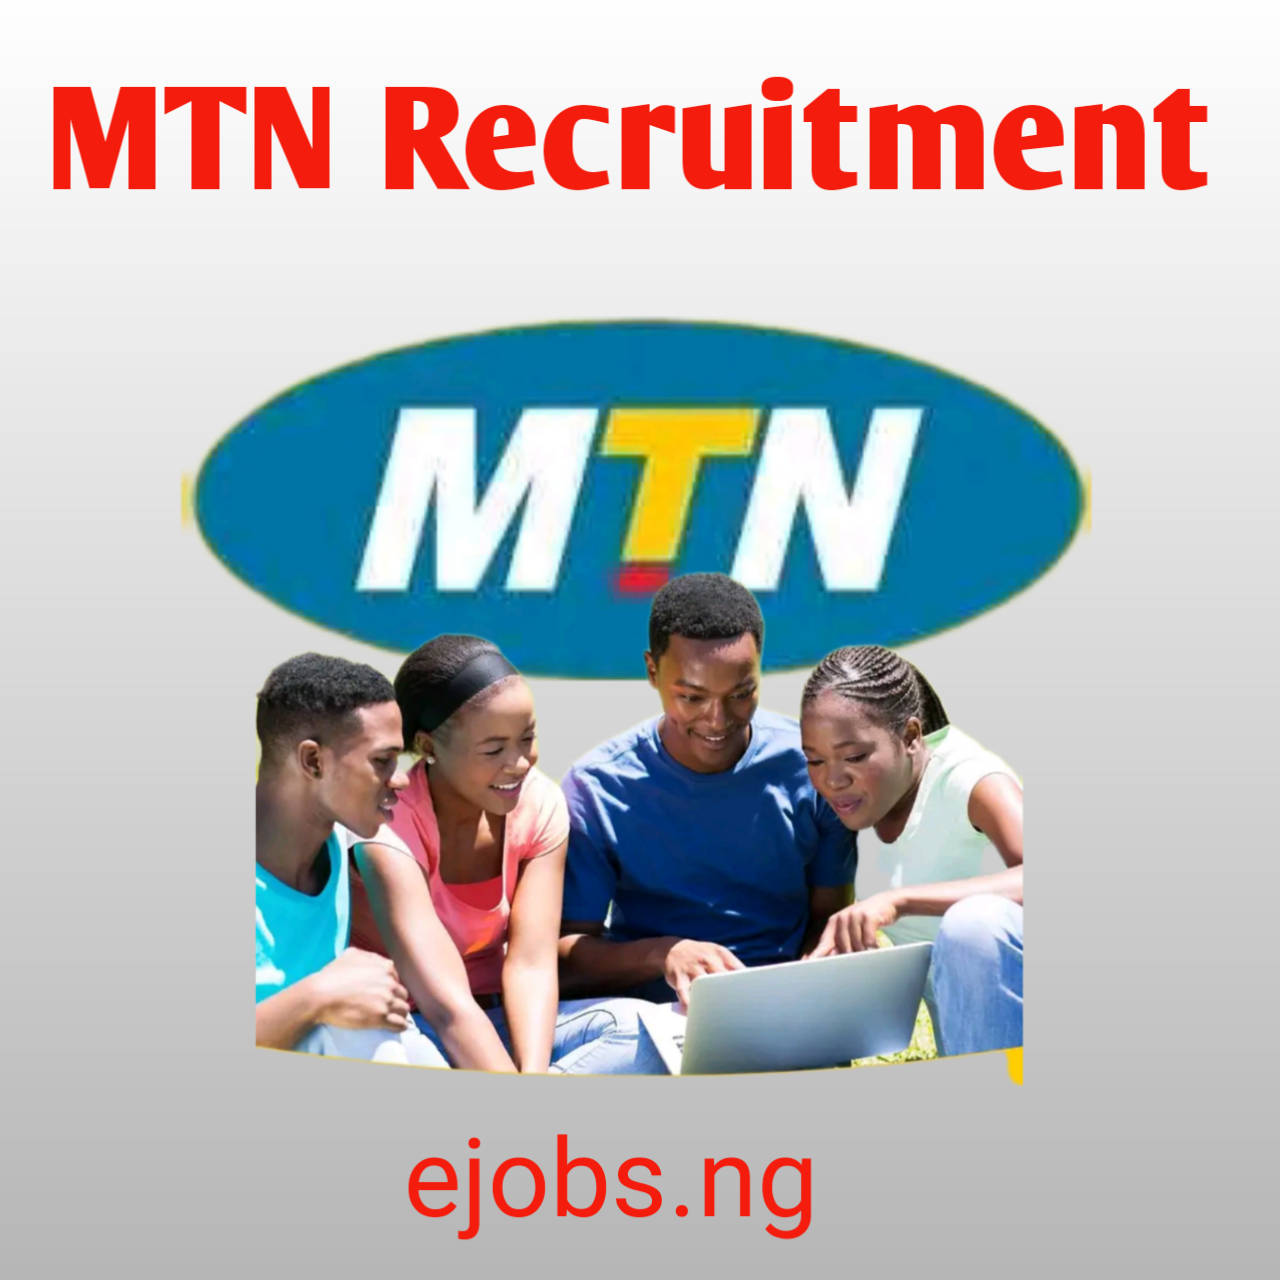 MTN Jobs in Nigeria, MTN vacancies and career opportunities, MTN graduate recruitment, MTN recruitment process, MTN recruitment 2022